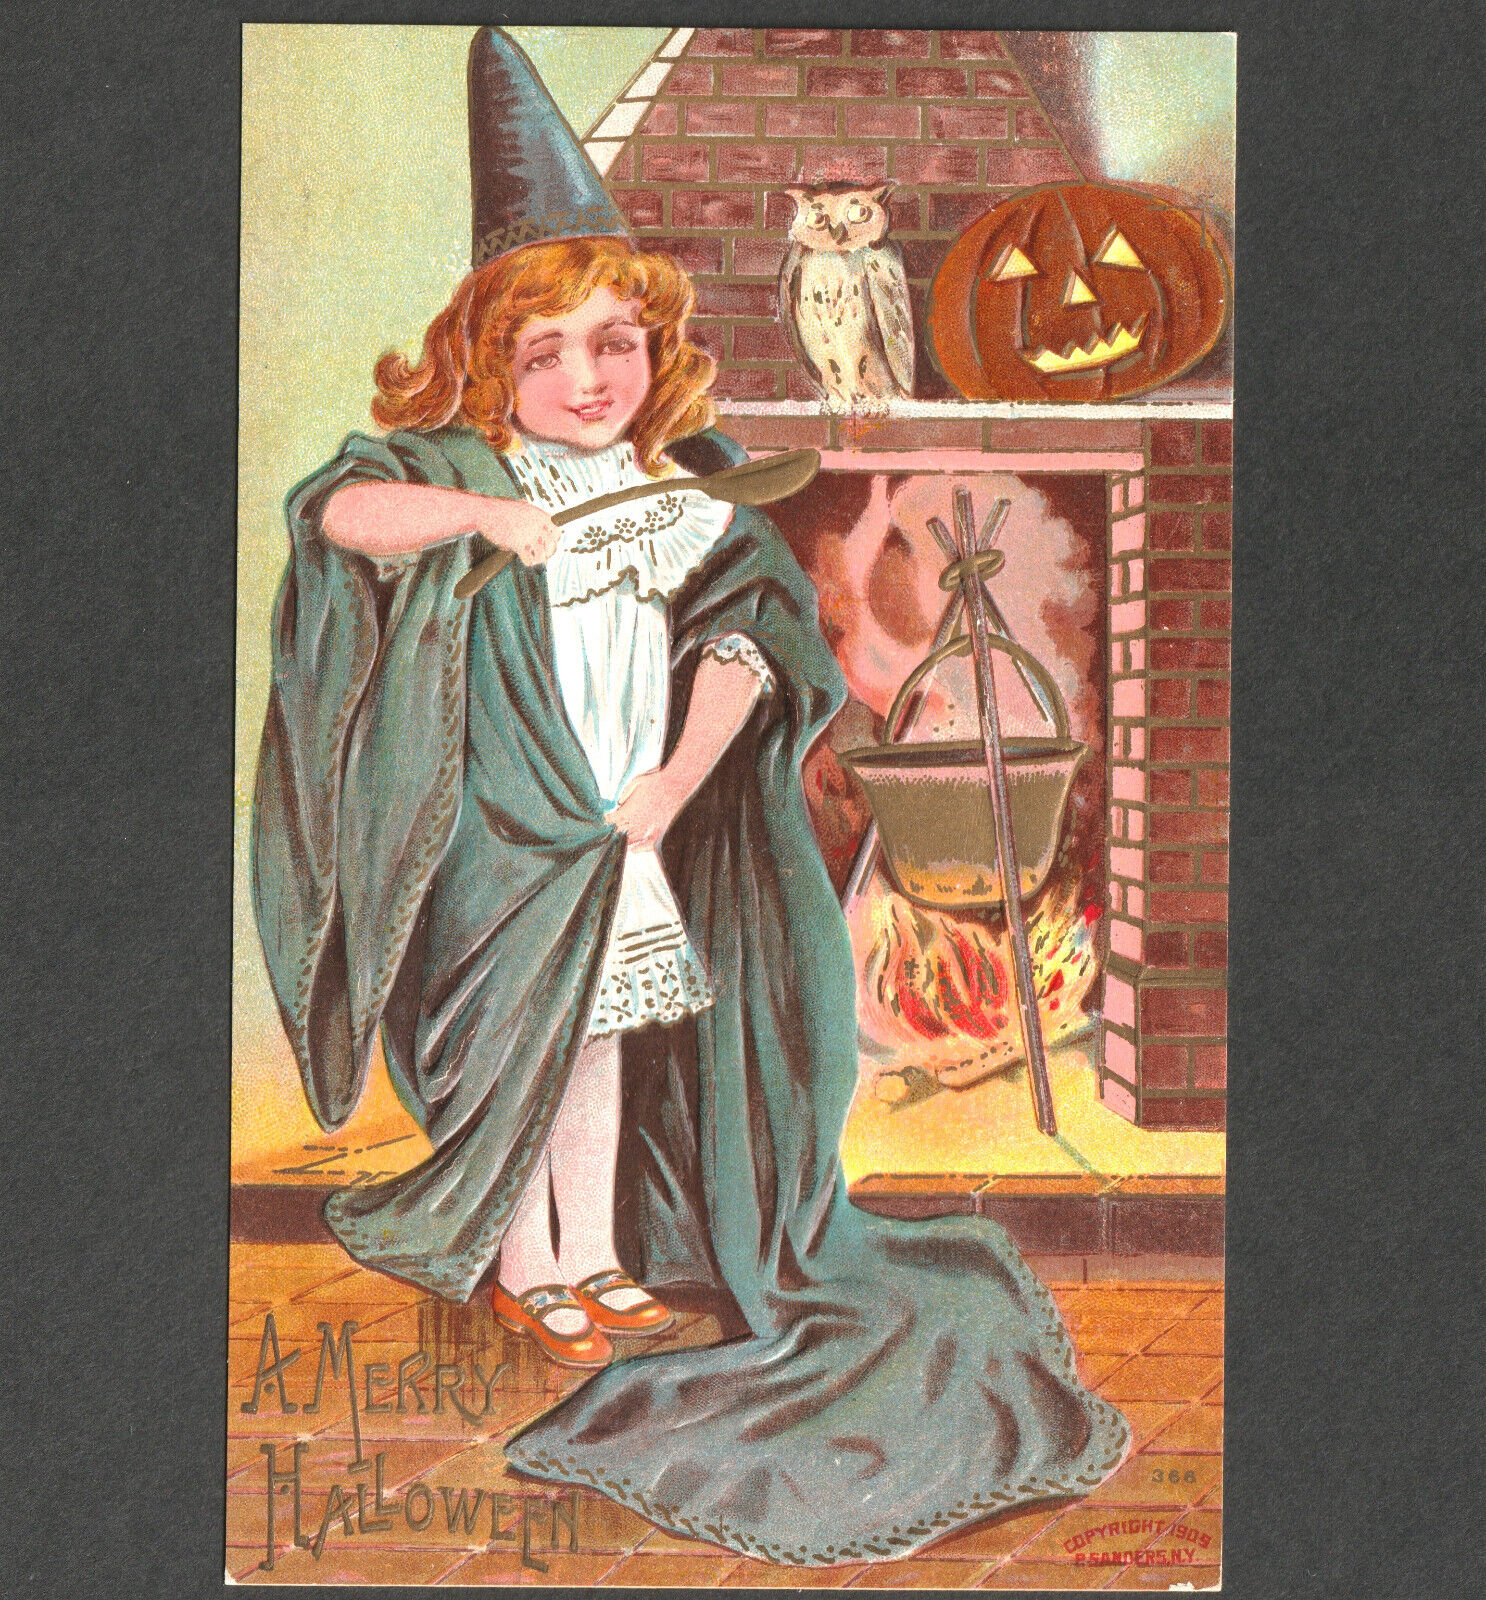 Antique 1909 A Merry Halloween Cute Witch Girl Owl JOL Sanders 366 SA1 PostCard